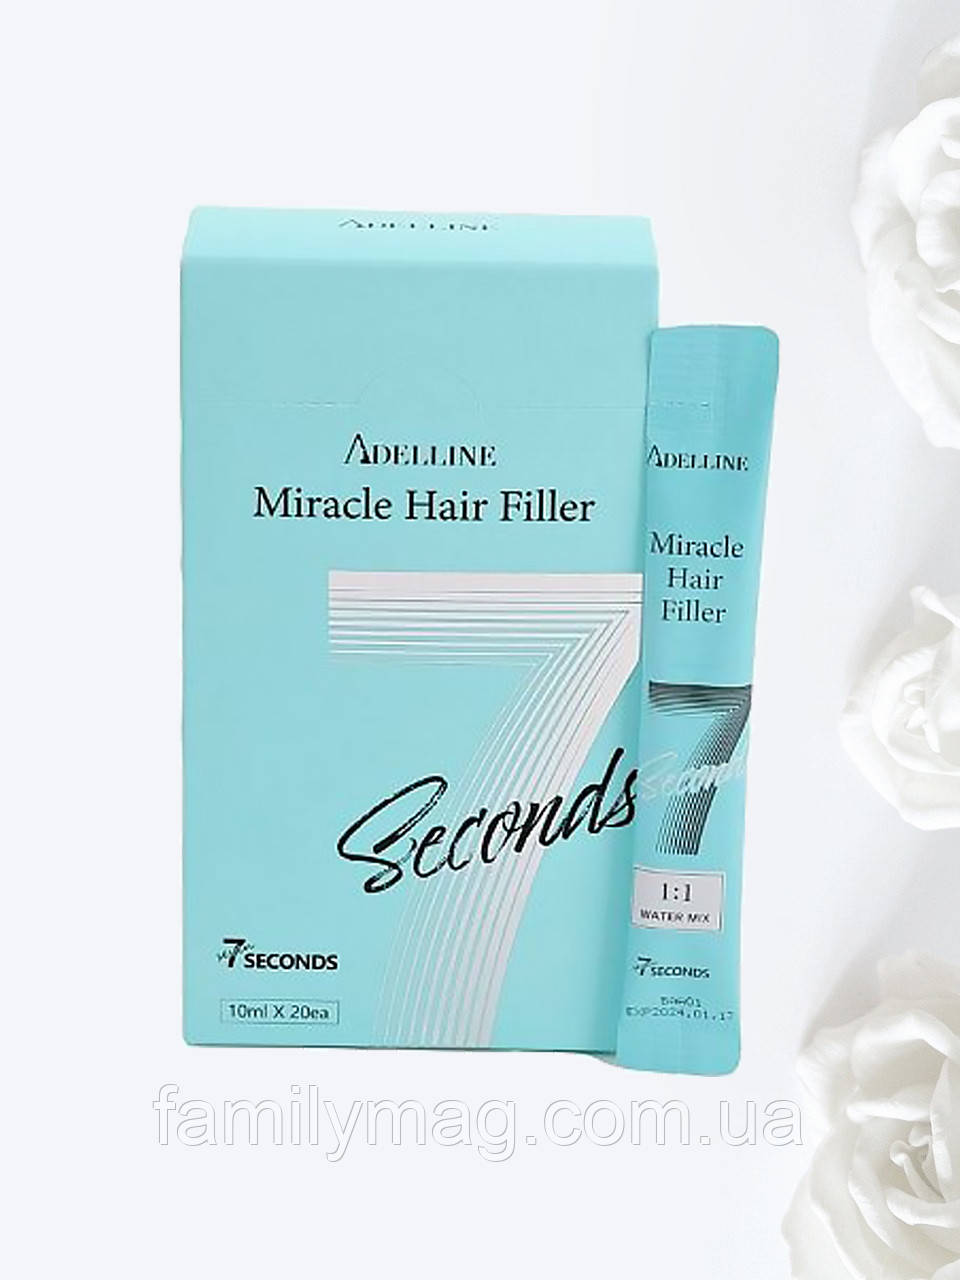 Філер для волосся відновлюючий 7 Seconds Miracle Hair Filler Adelline 1 шт (10 мл)